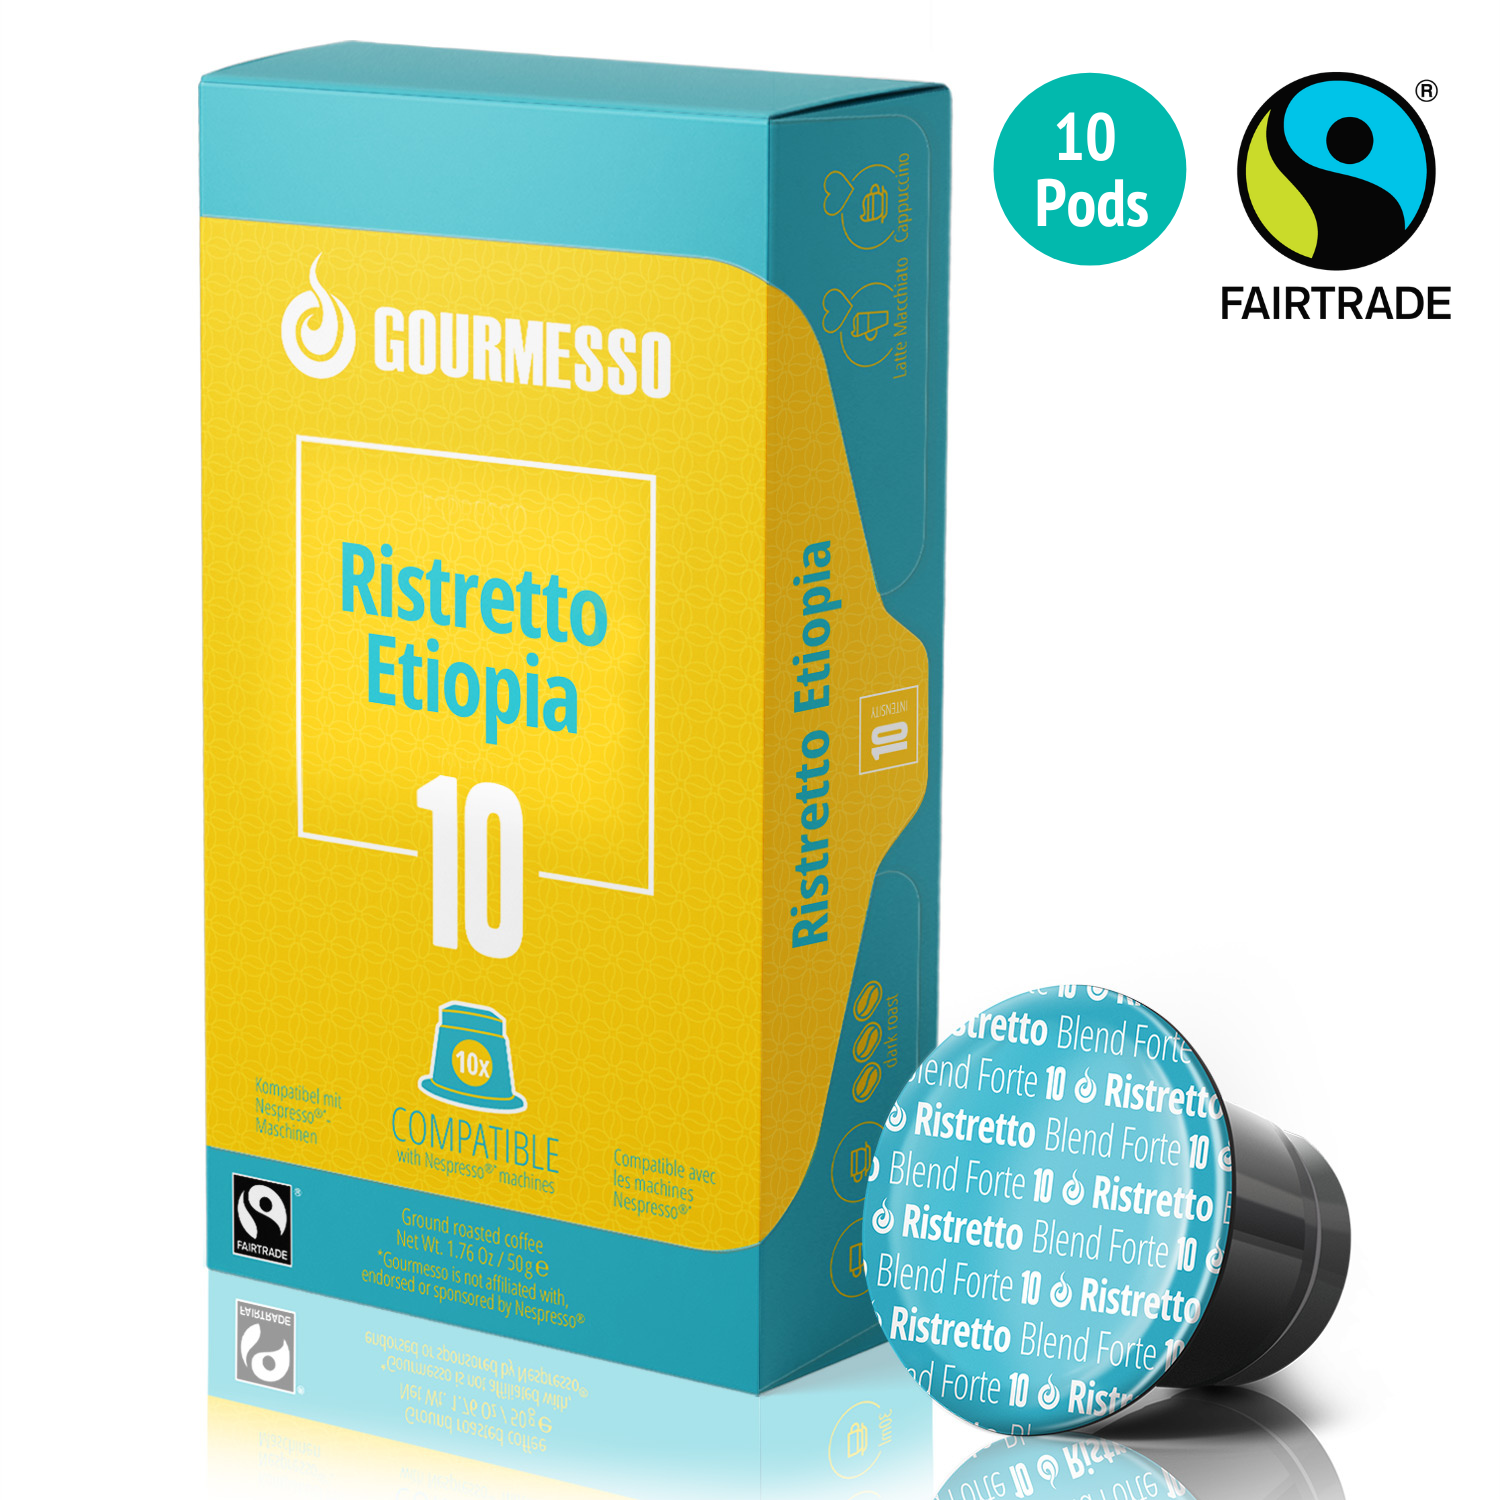 Image of Ristretto Etiopia - Fairtrade Certified